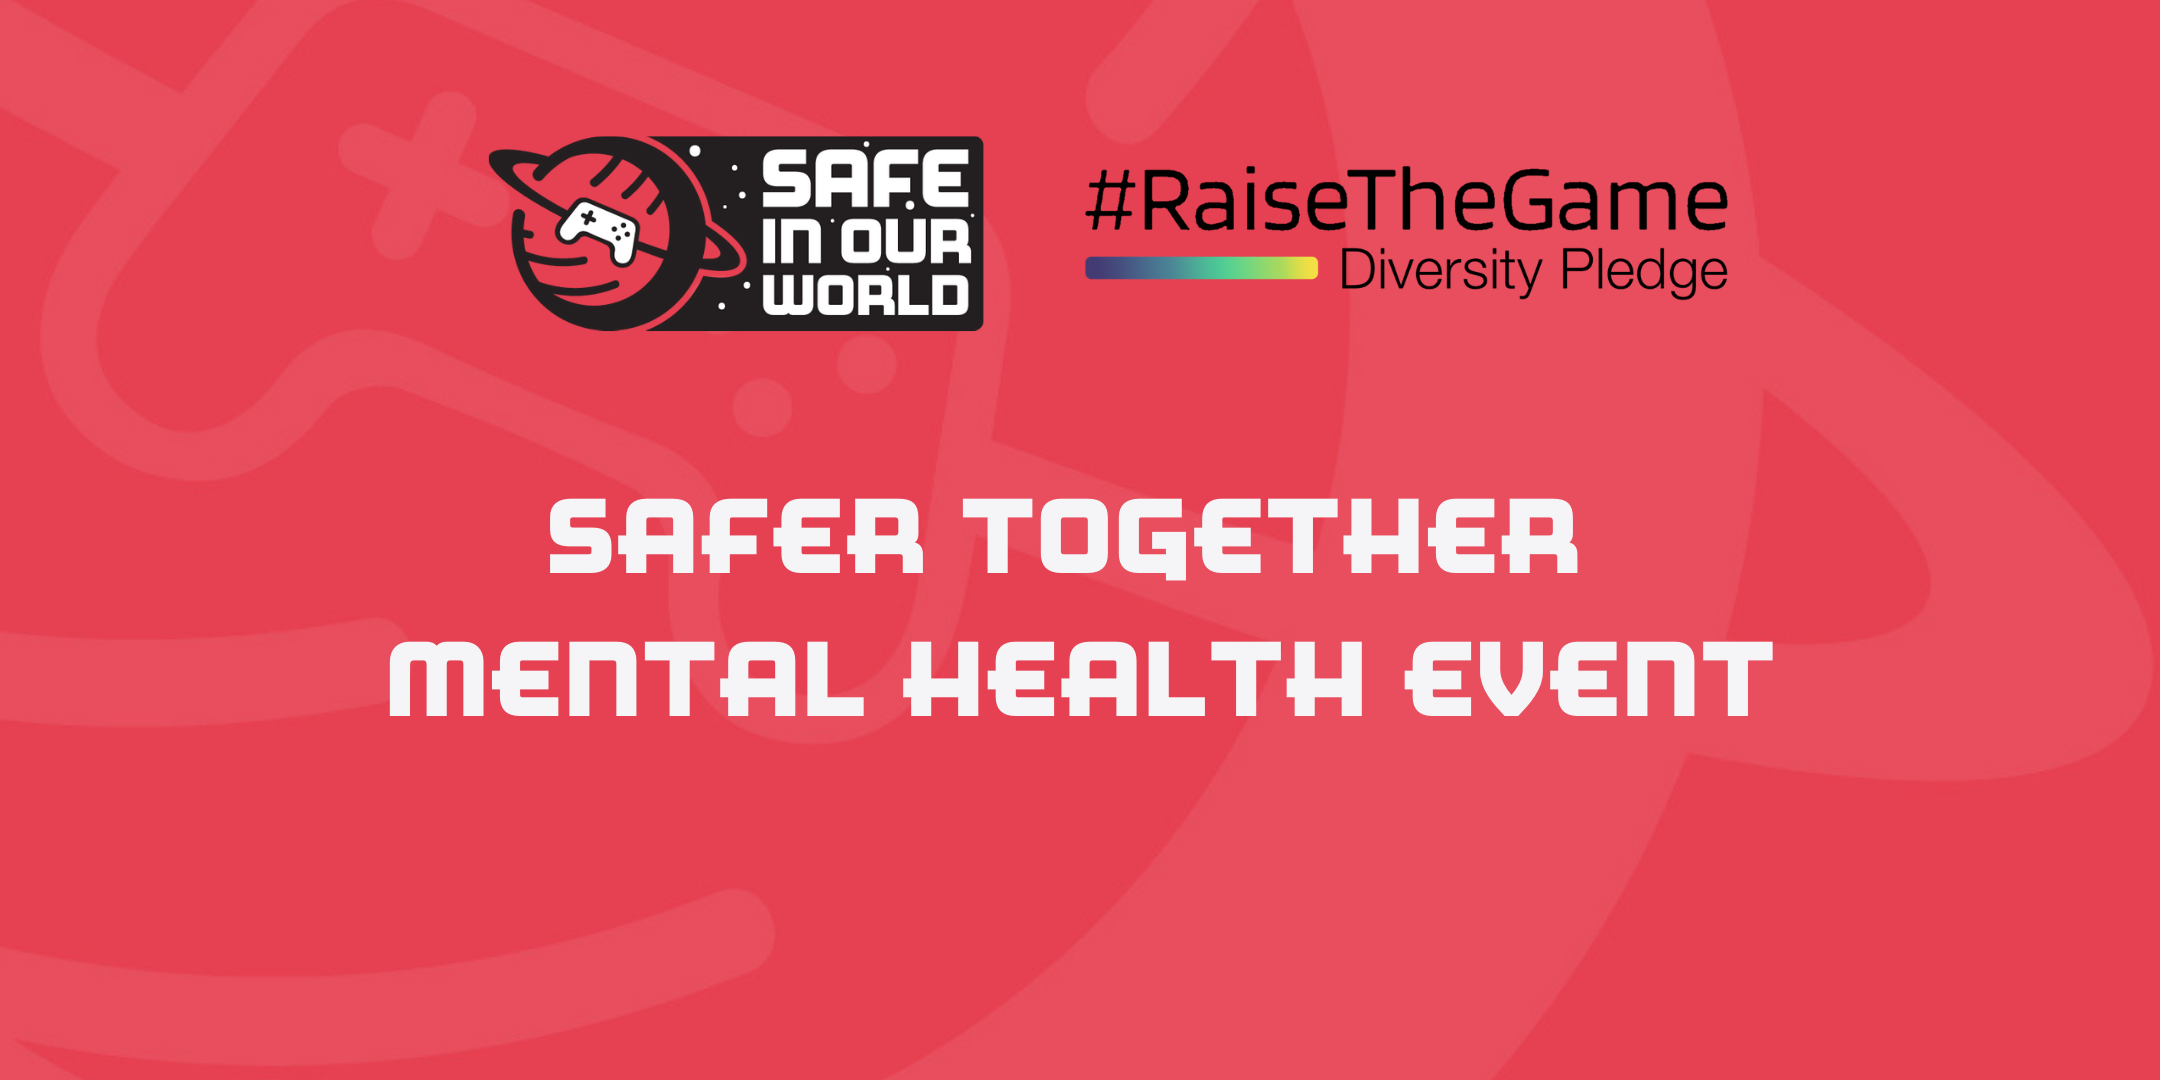 <img src="Safer Together Mental Health Event.jpg" alt="Online Event Between #RaiseTheGame and Safe In Our World about Mental Health like Imposter Syndrome">